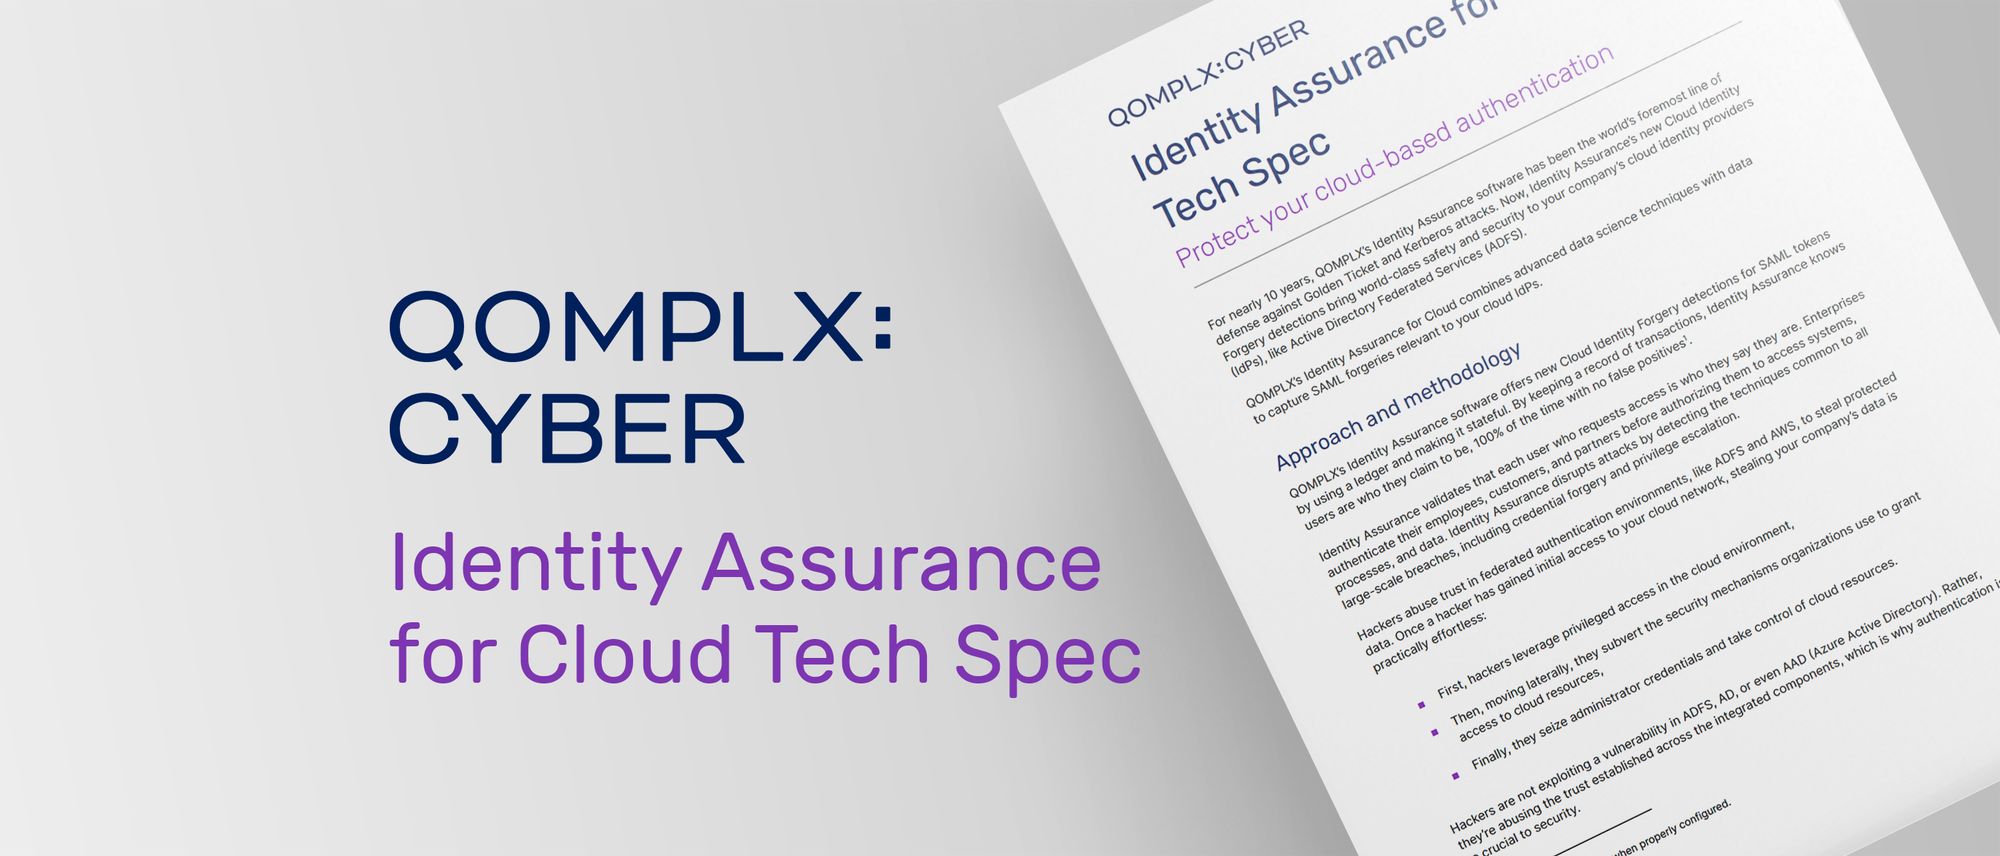 QOMPLX:CYBER Identity Assurance for Cloud Tech Spec